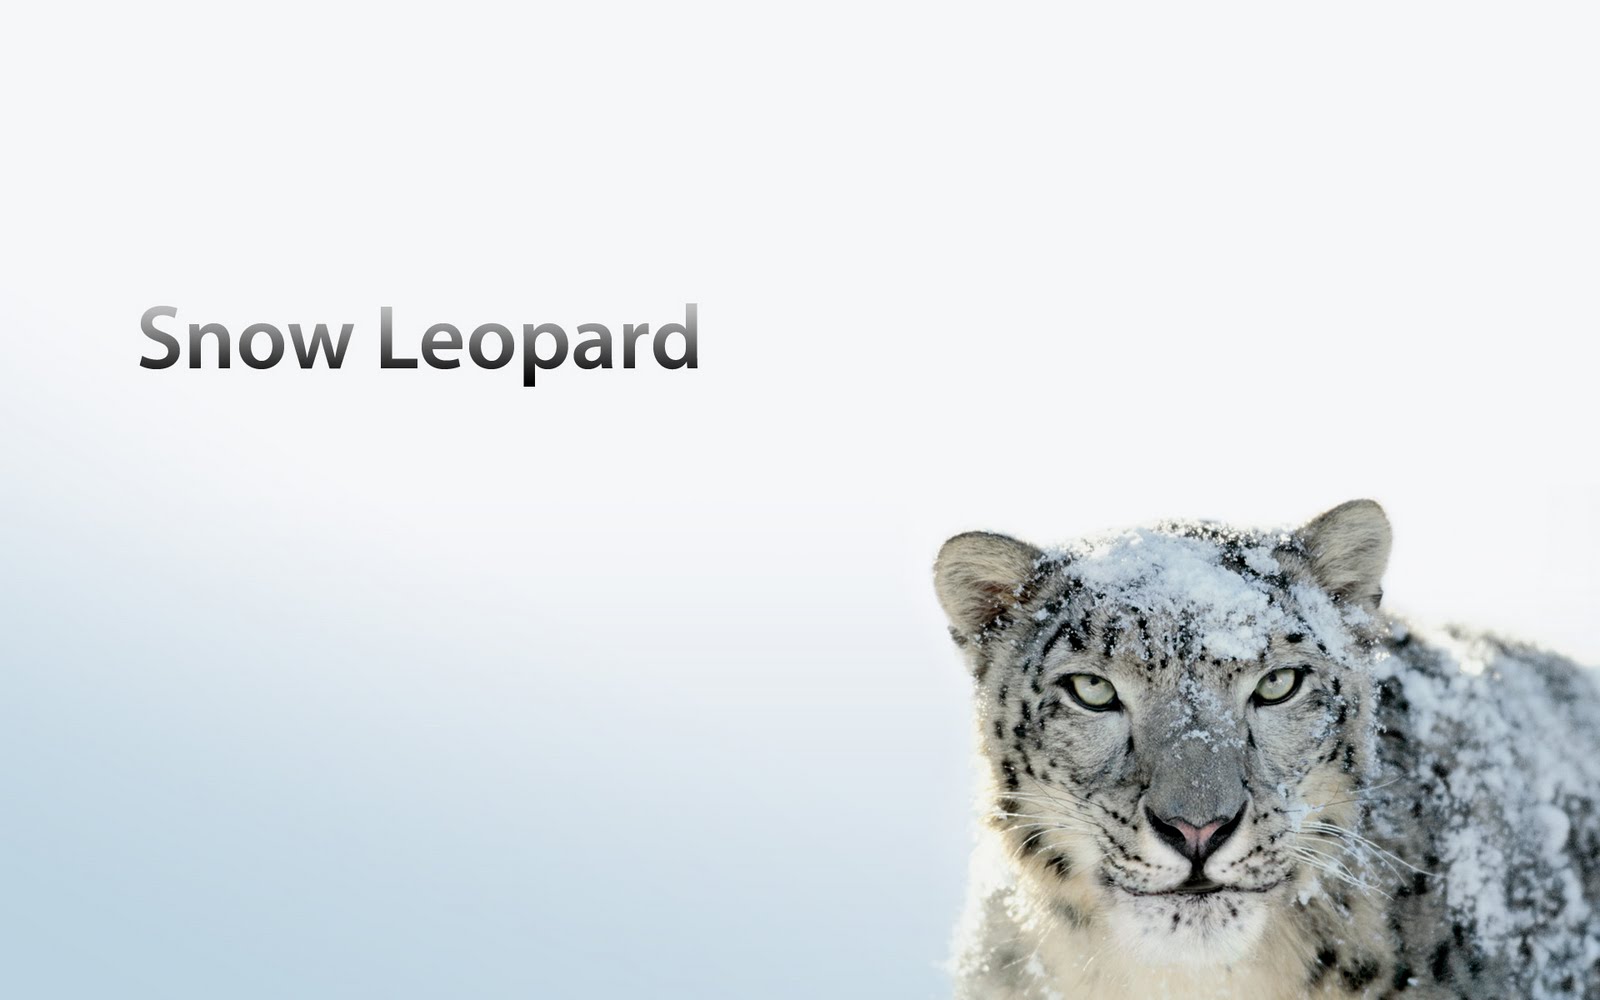 Mac Os X 10.6 Snow Leopard Free Download